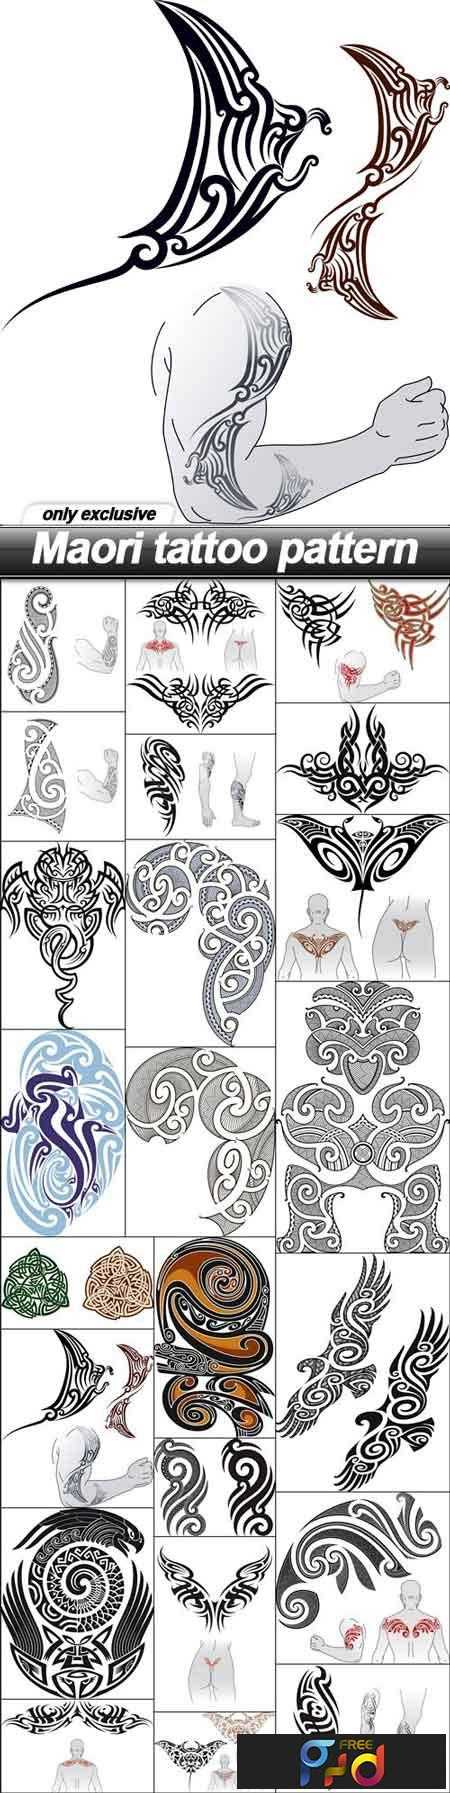 FreePsdVn.com_VECTOR_1701112_maori_tattoo_pattern_23_eps